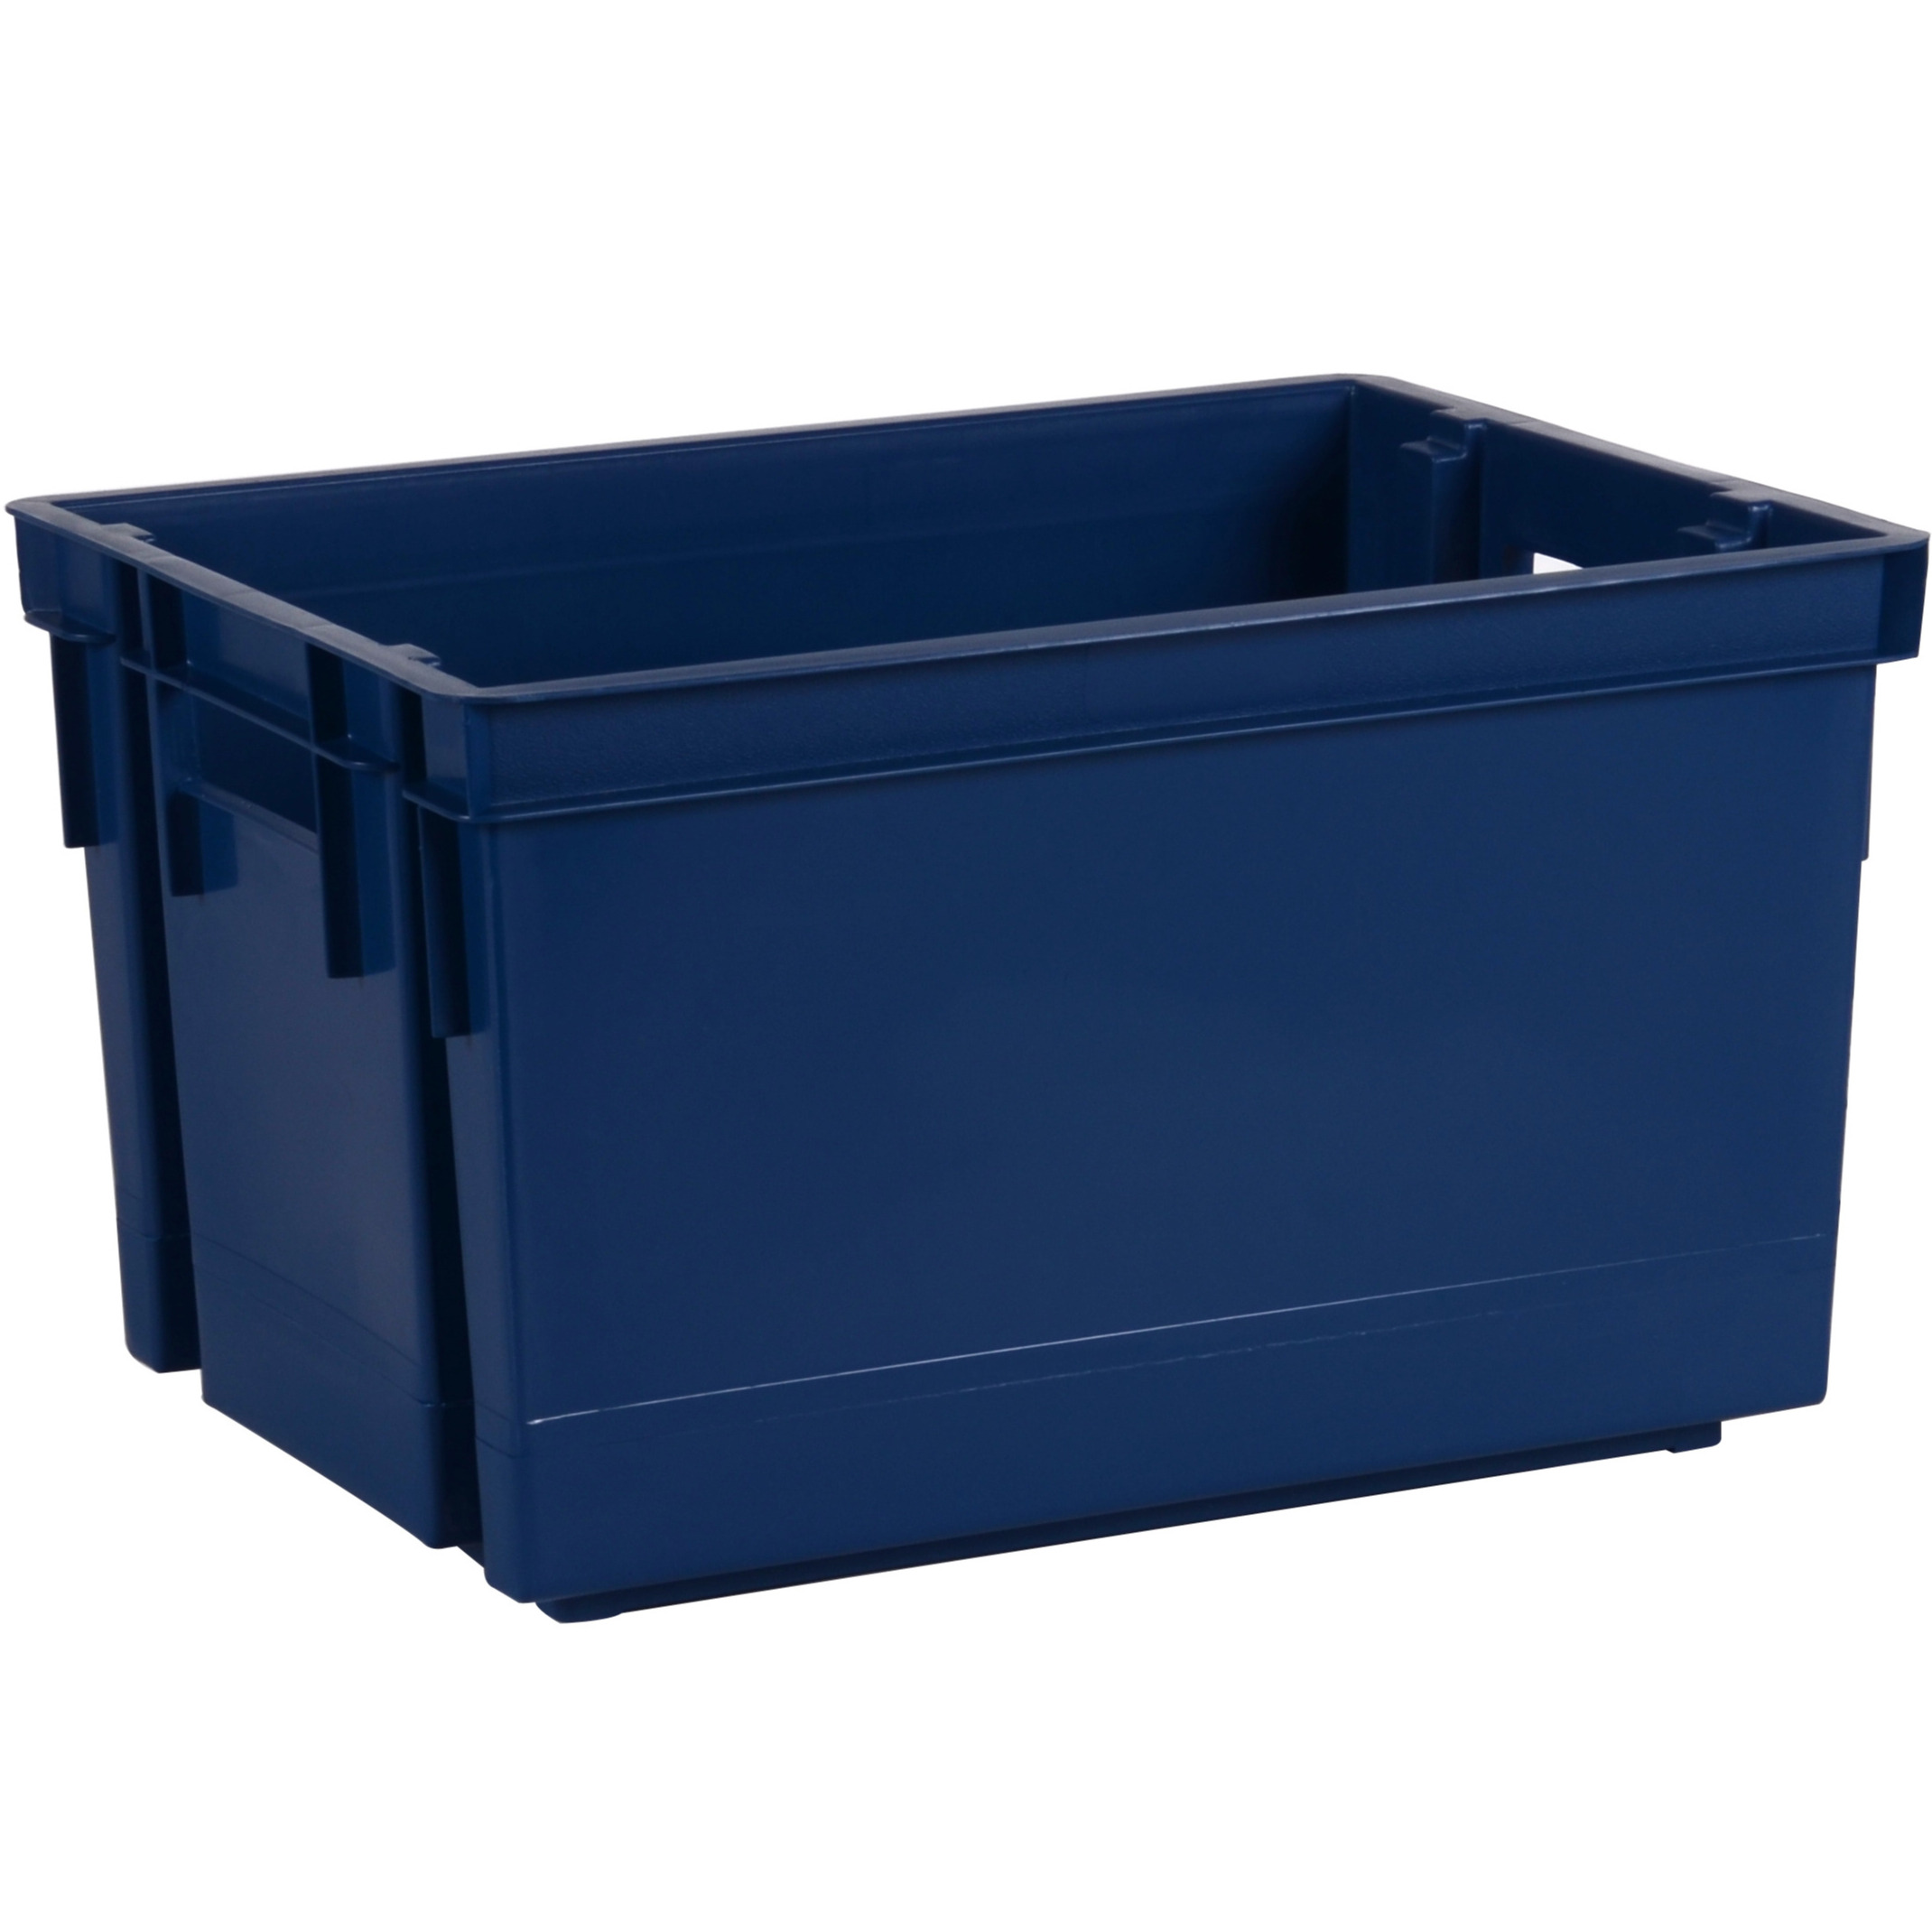 Opbergbox-opbergkrat 20 L blauw kunststof 39 x 29 x 23 cm stapelbaar-nestbaar